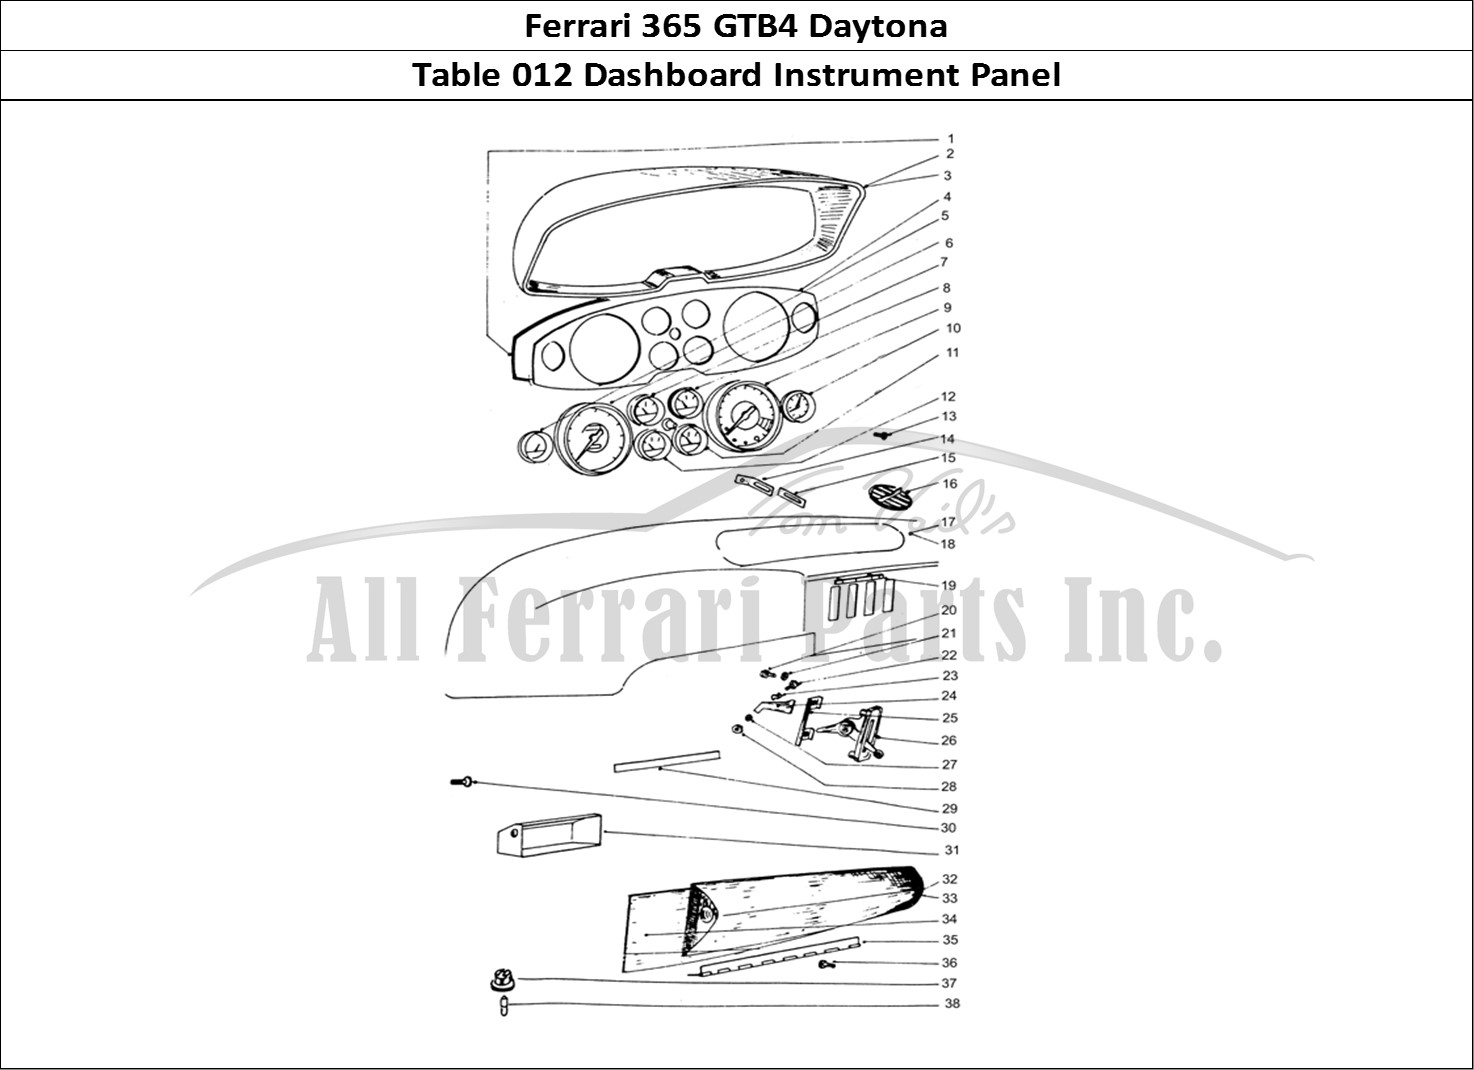 Ferrari Parts Ferrari 365 GTB4 Daytona (Coachwork) Page 012 Instrument cluster - Glov